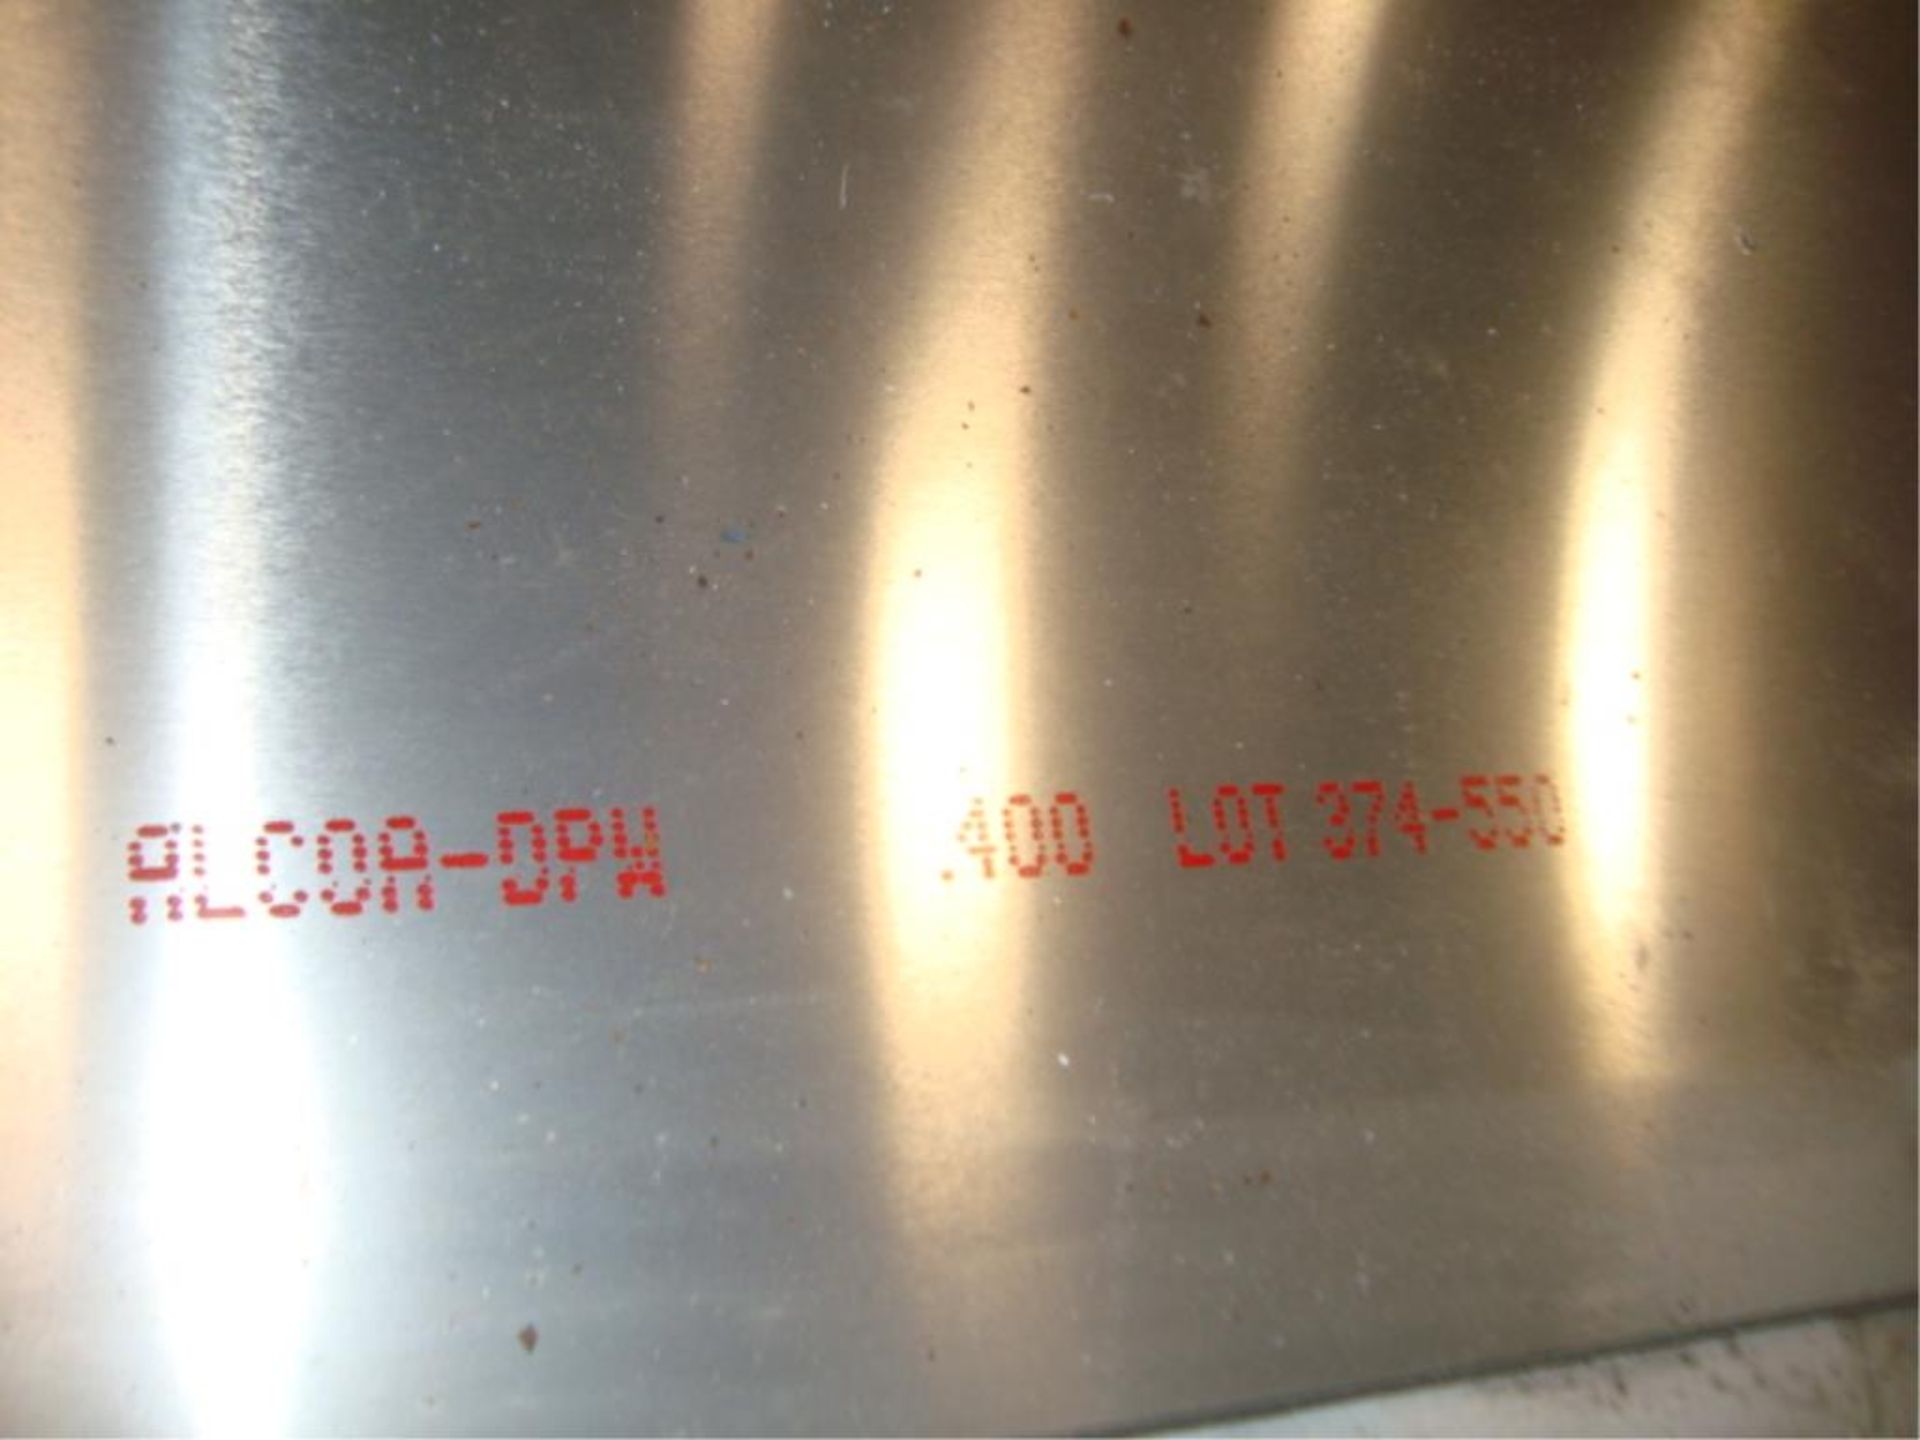 Unused Raw Stock Aluminum Plates - Image 4 of 7